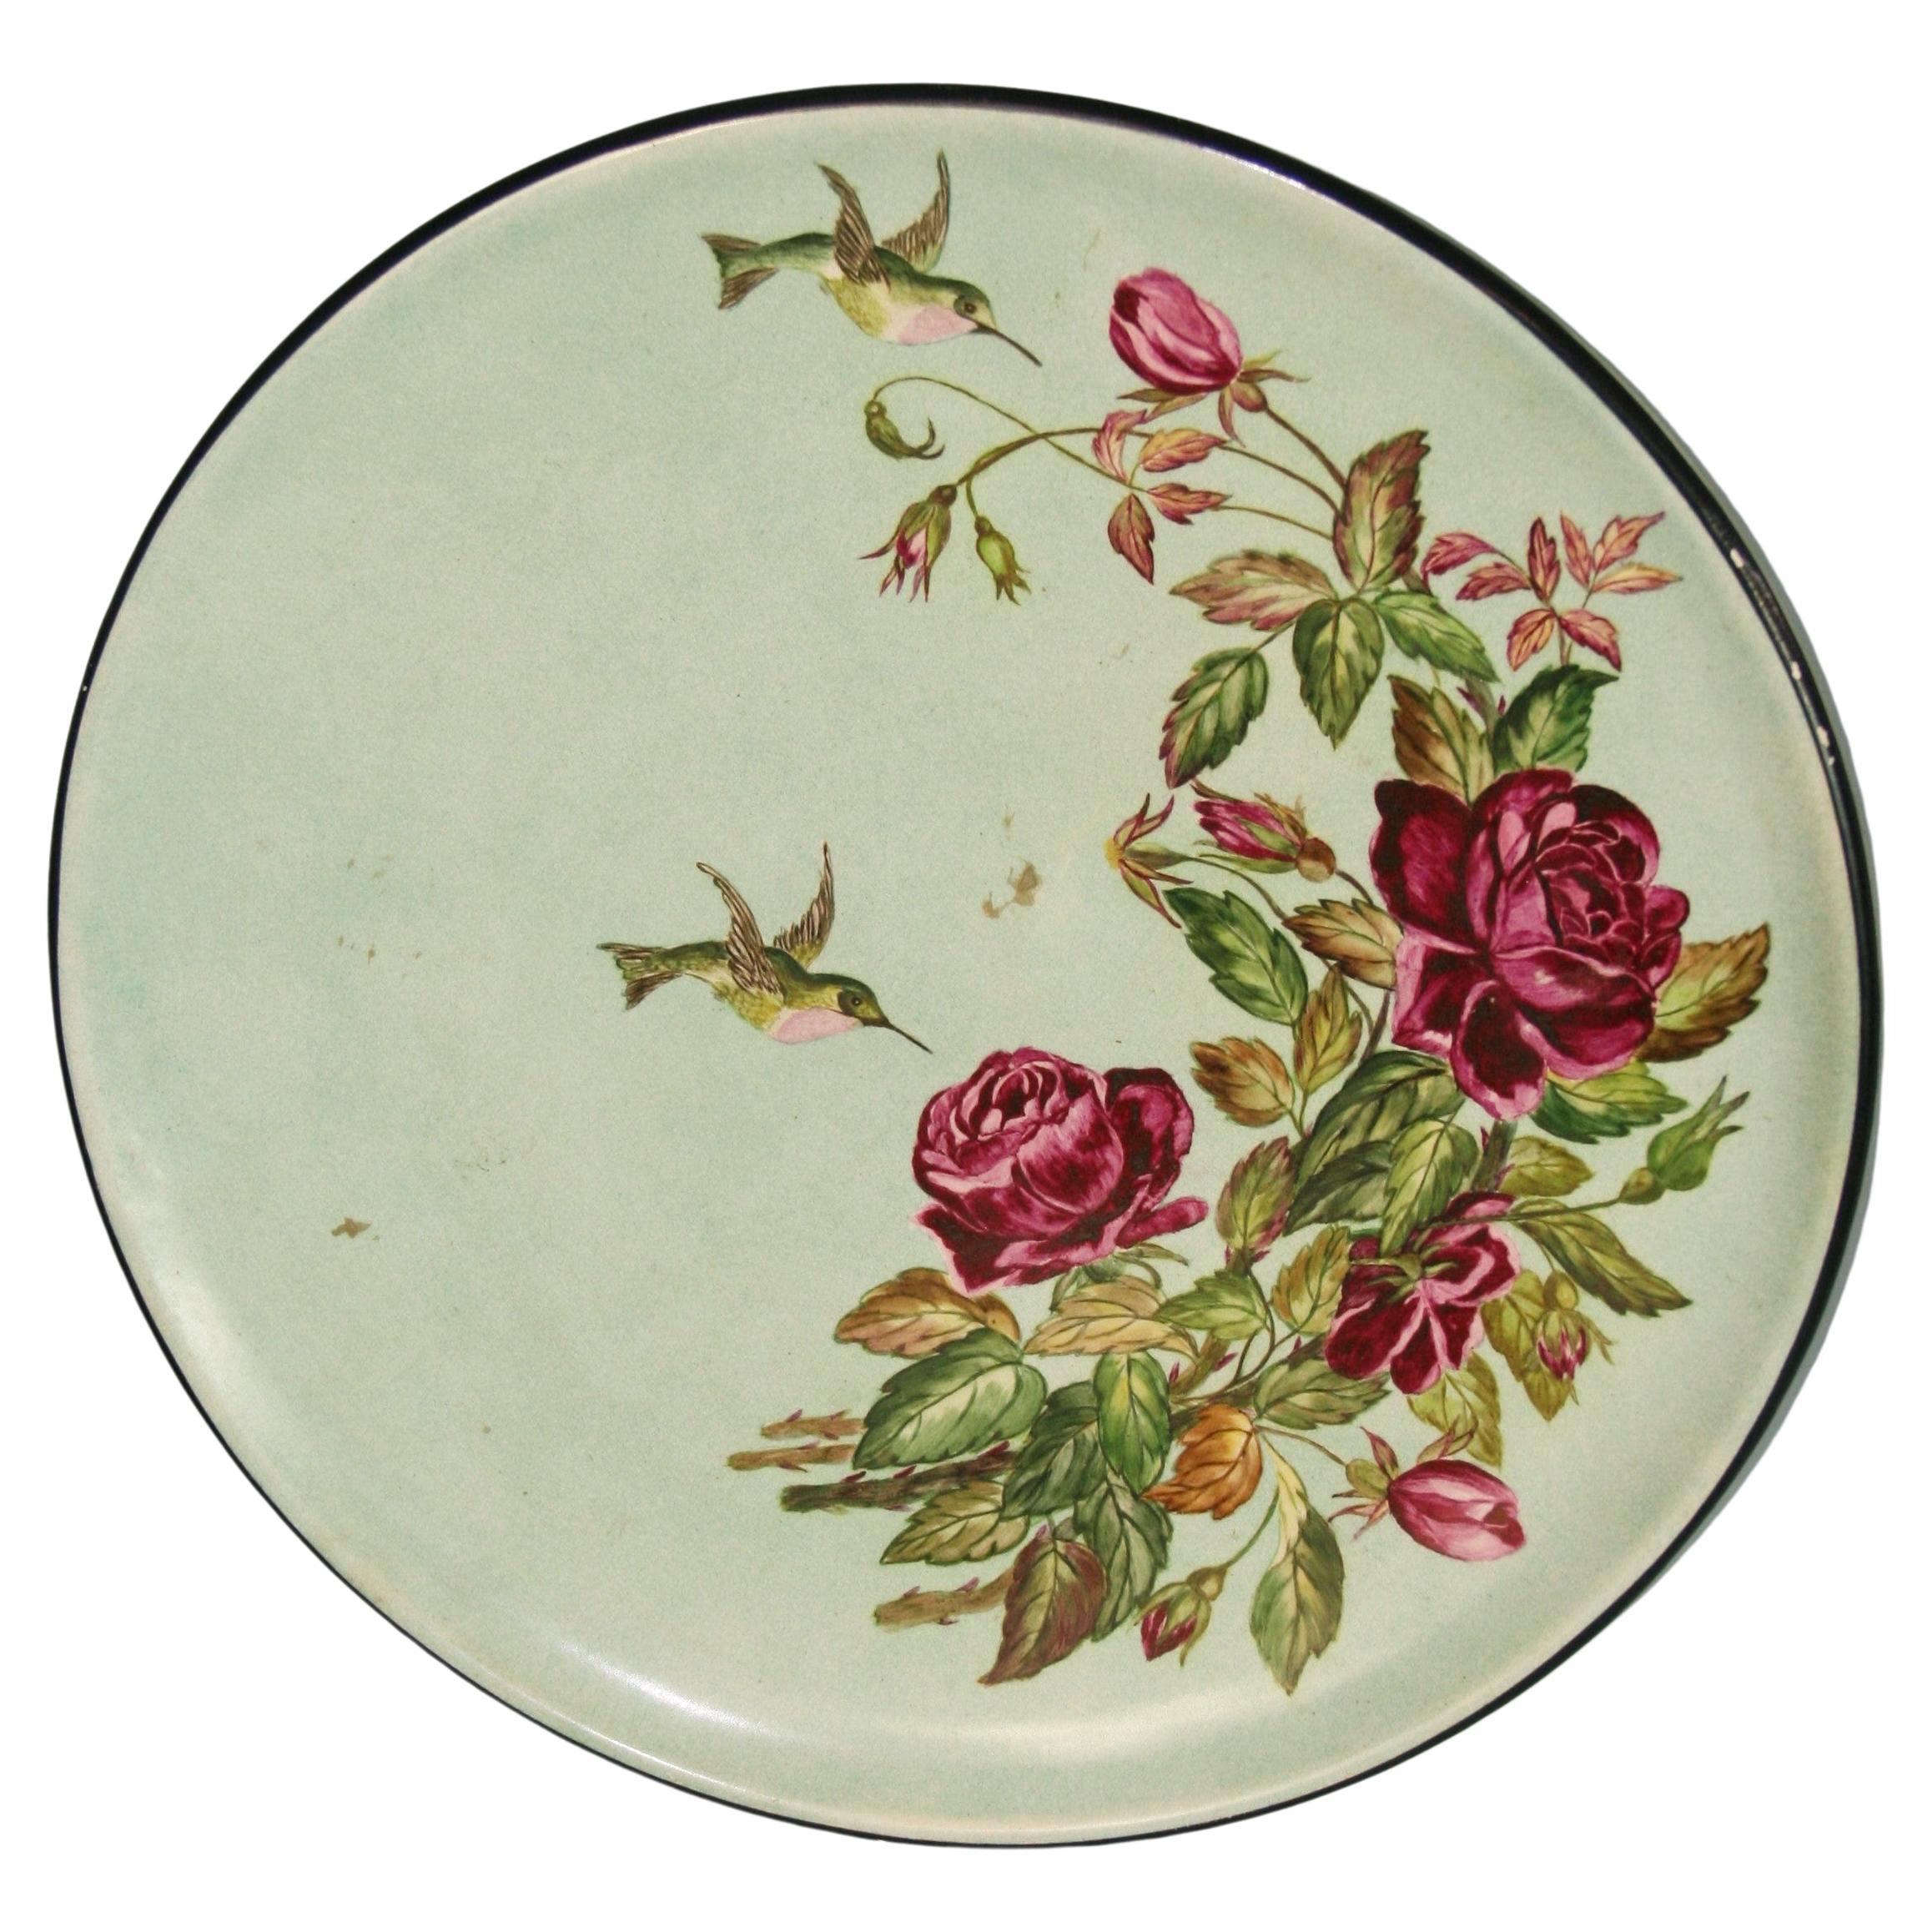 Vintage Englisch   Keramik  Charger mit Humming Birds and Roses Dekorationen, 1940